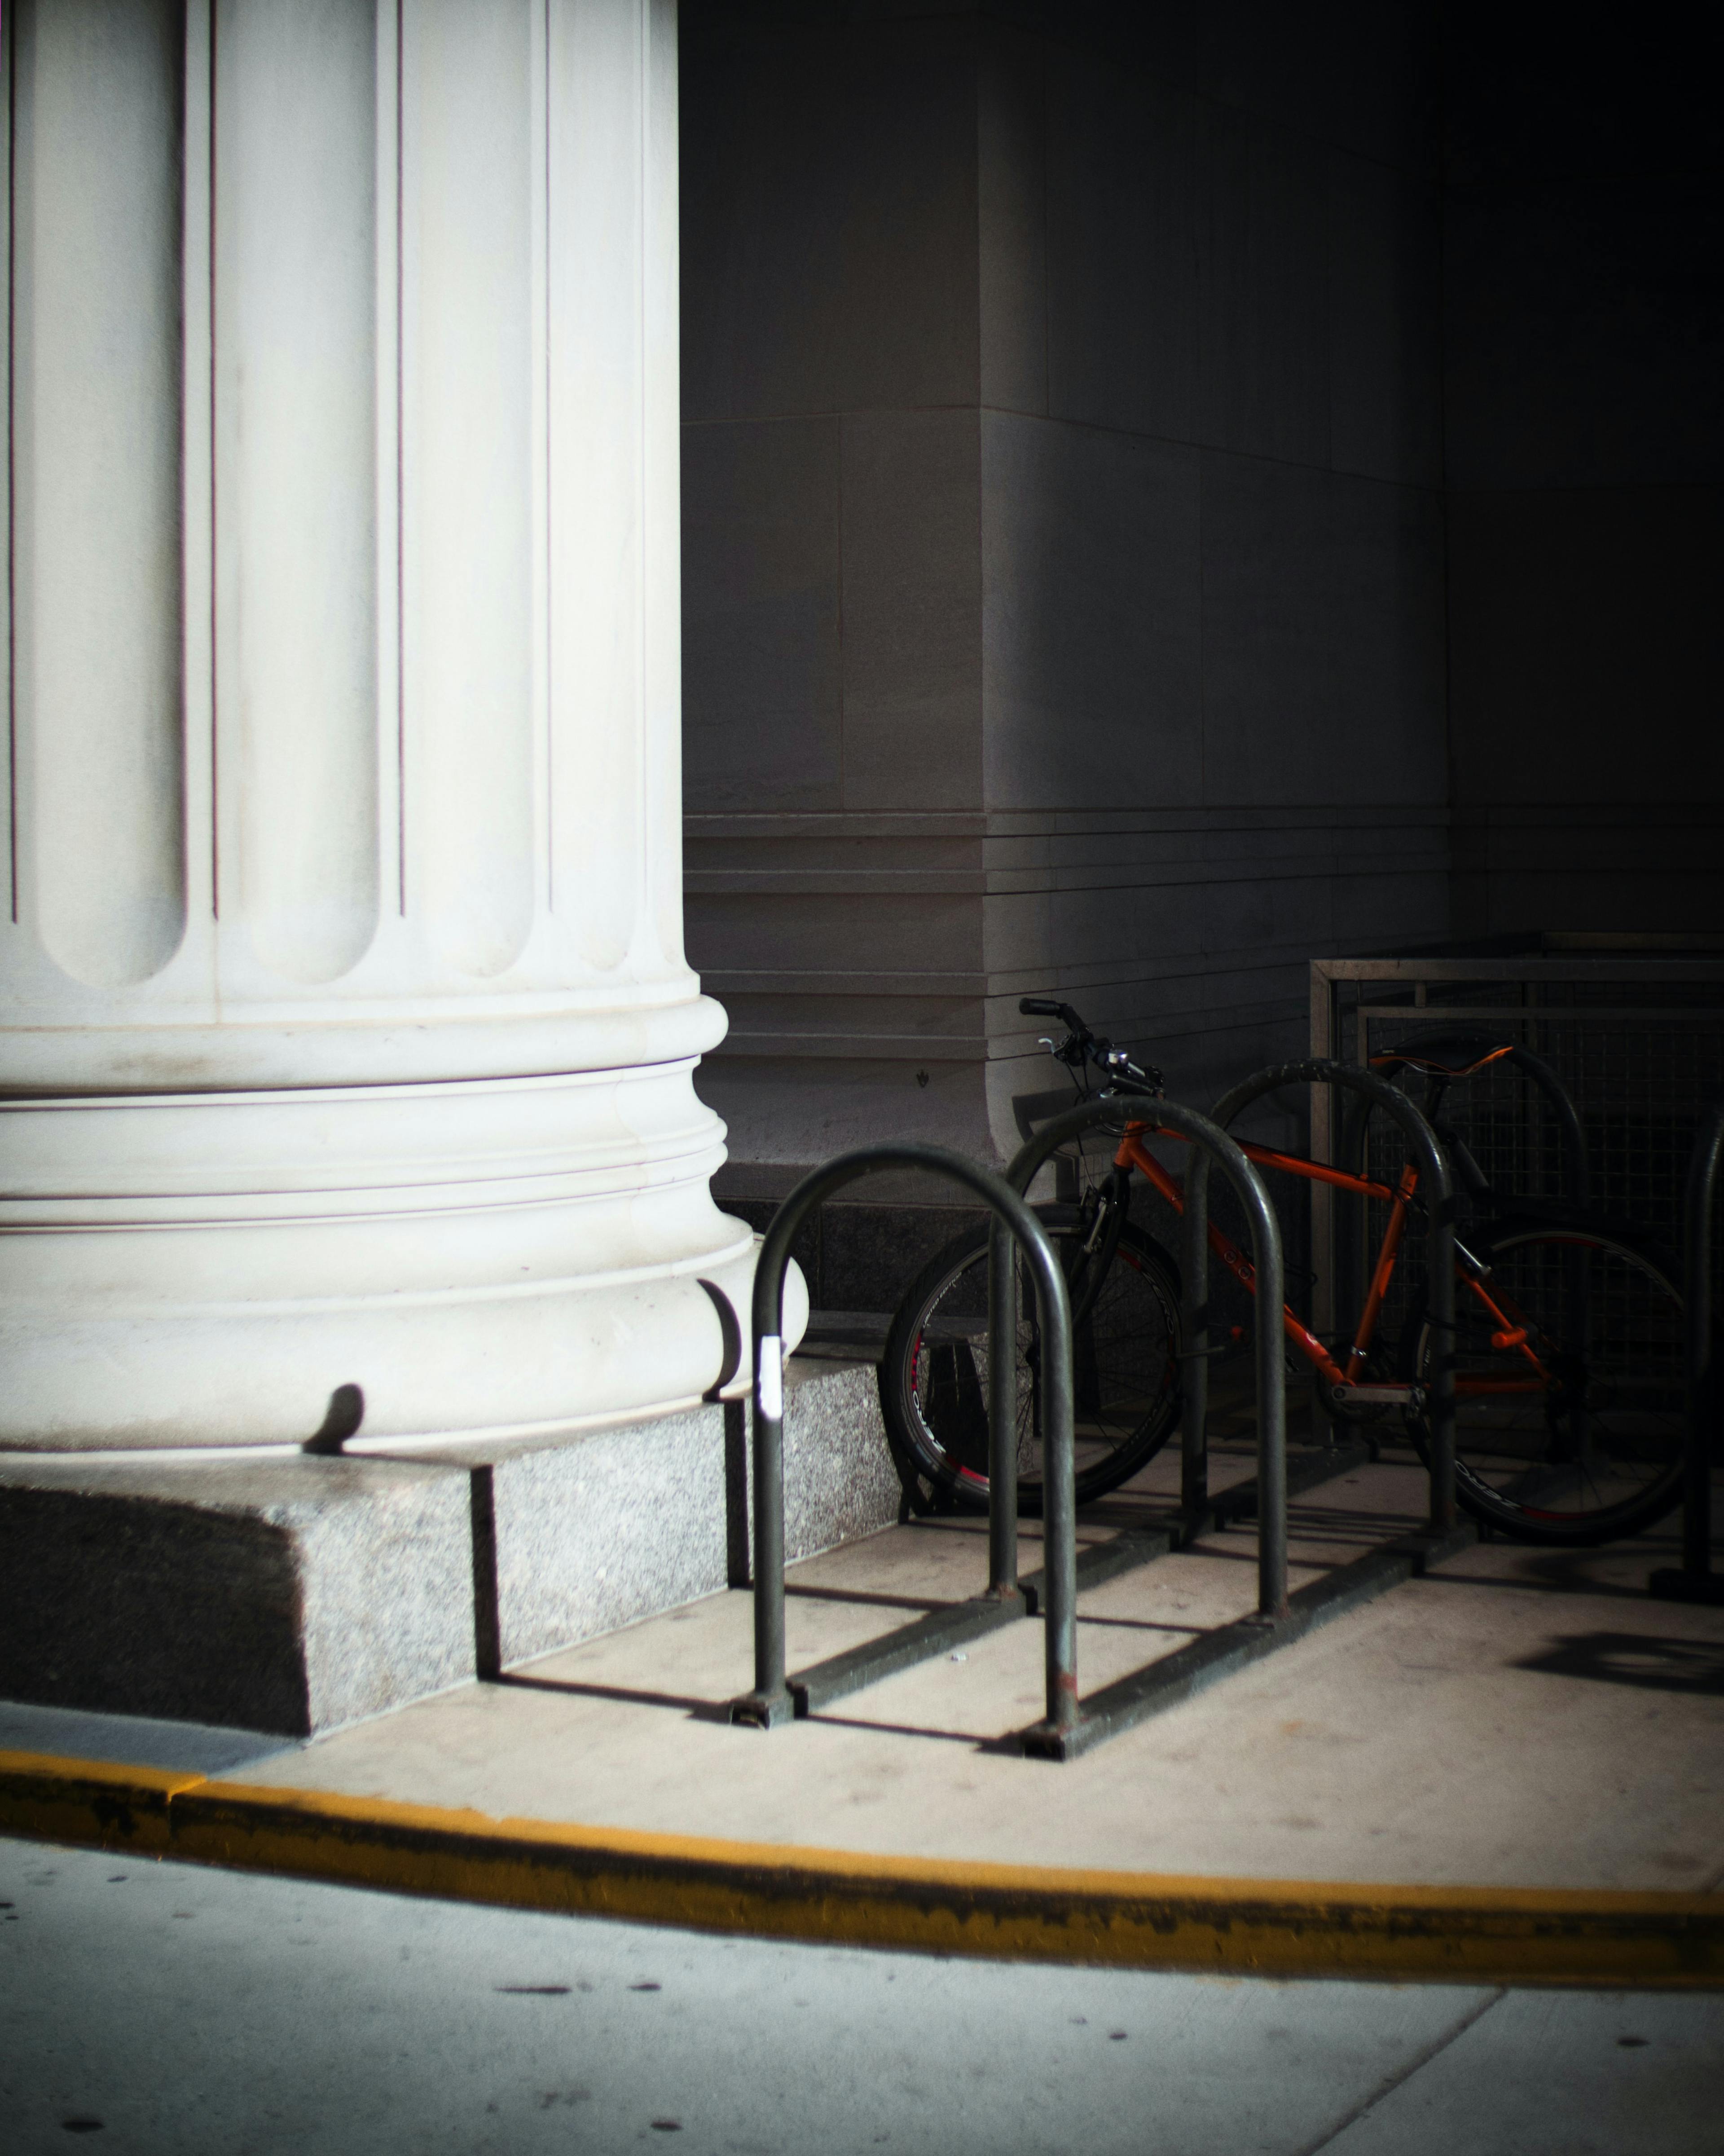 A bike at William H. Gray III Train Station in Philadelphia, US